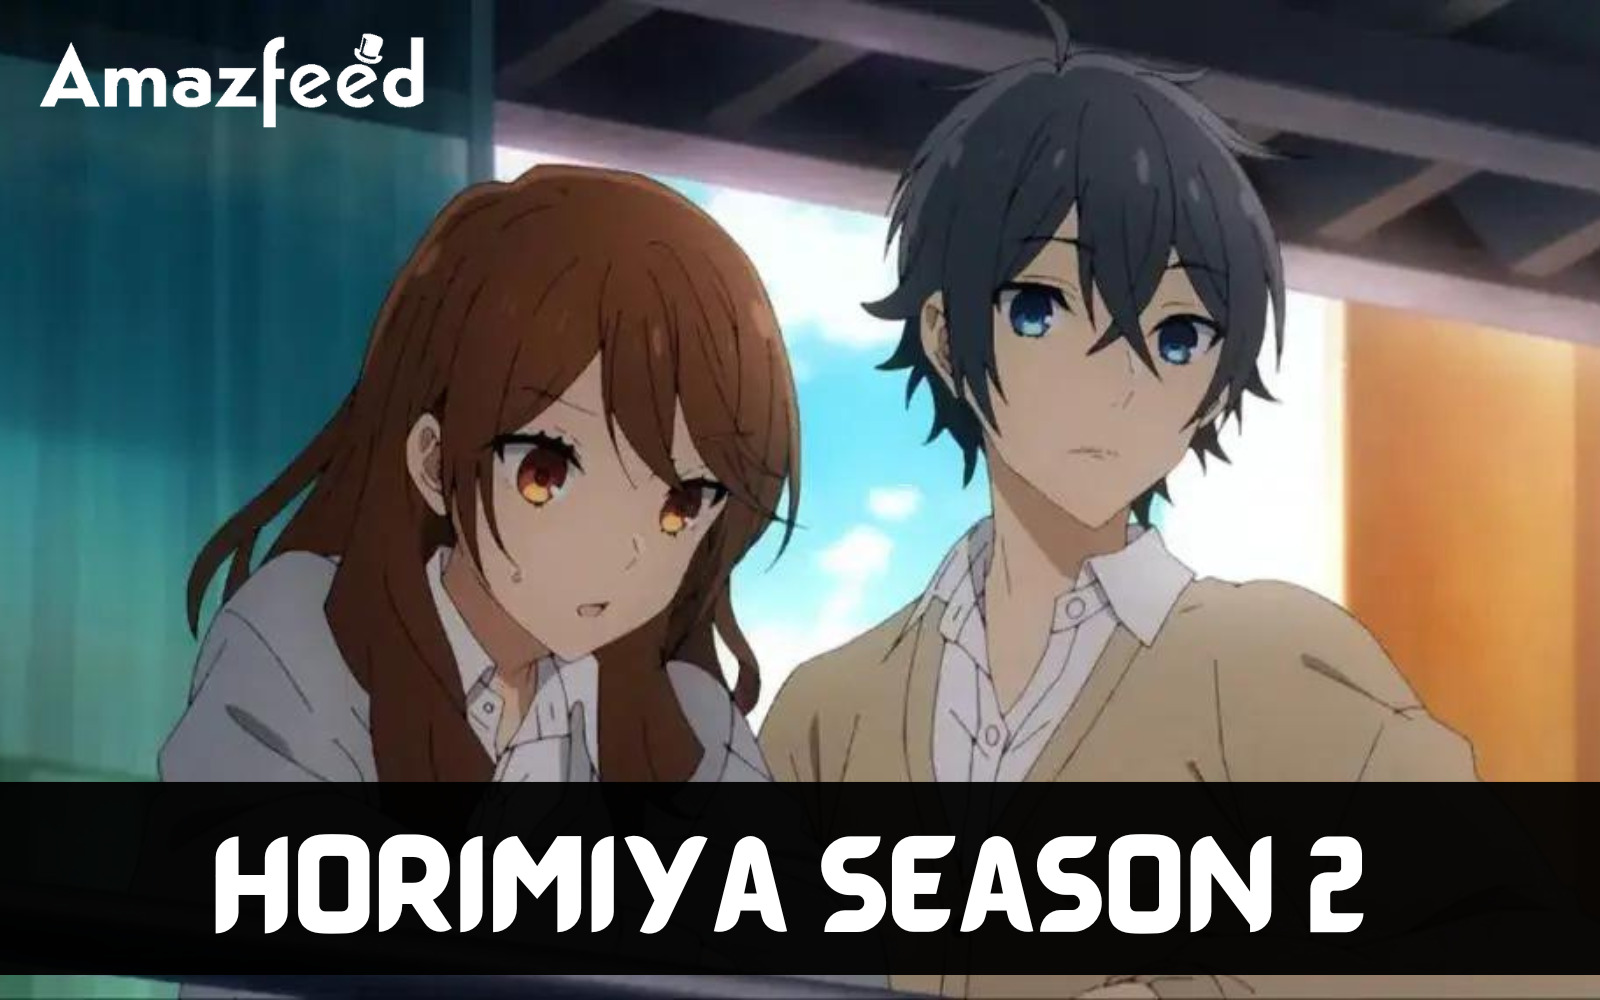 Will season 2 Of Horimiya – Canceled Or Renewed